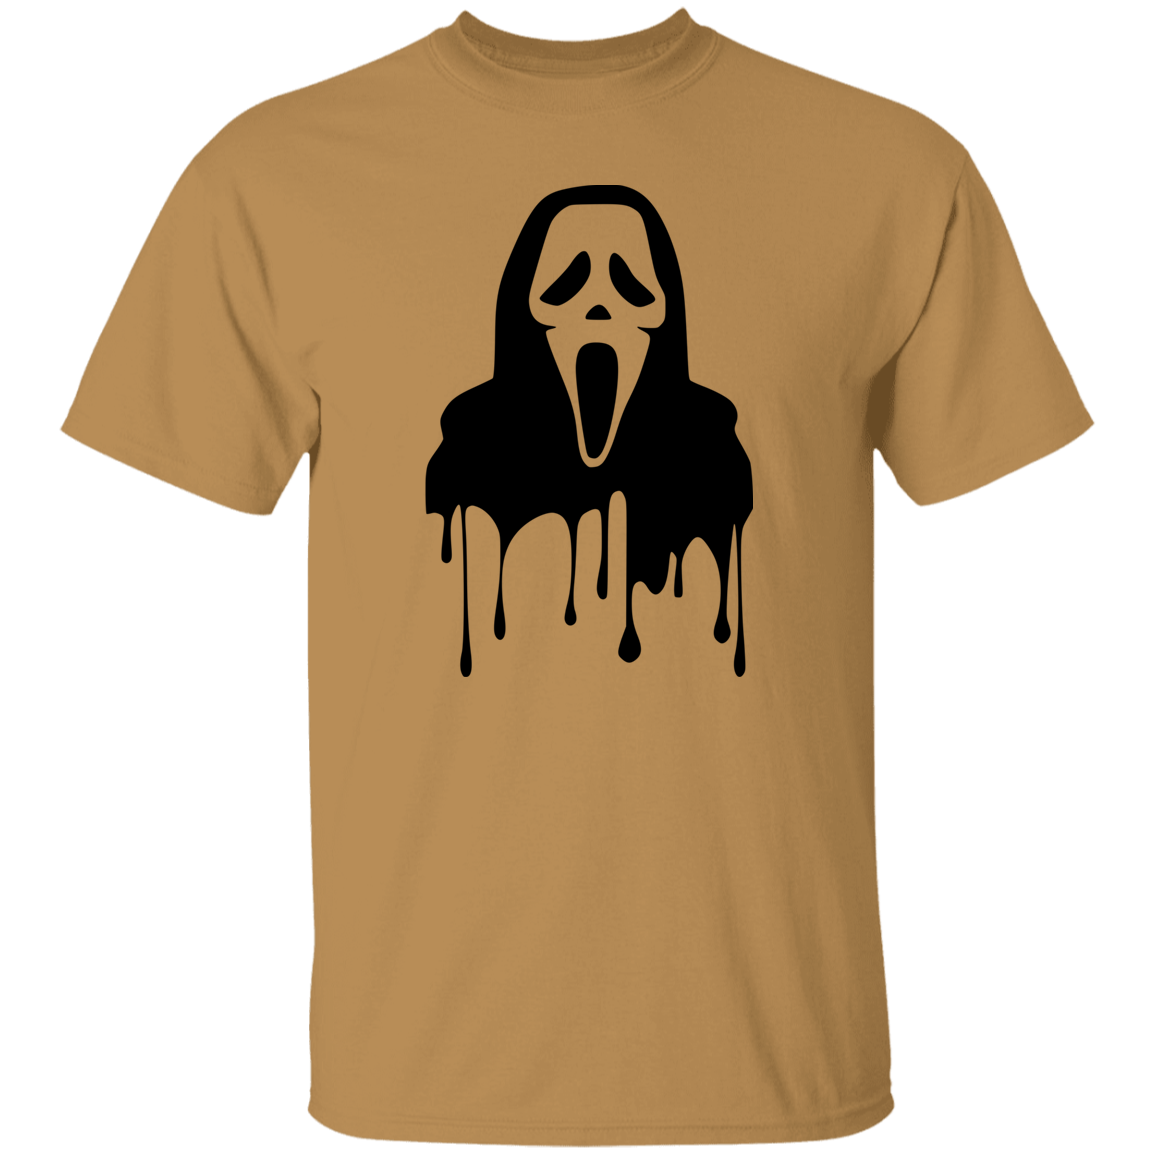 Scream 5.3 oz. T-Shirt